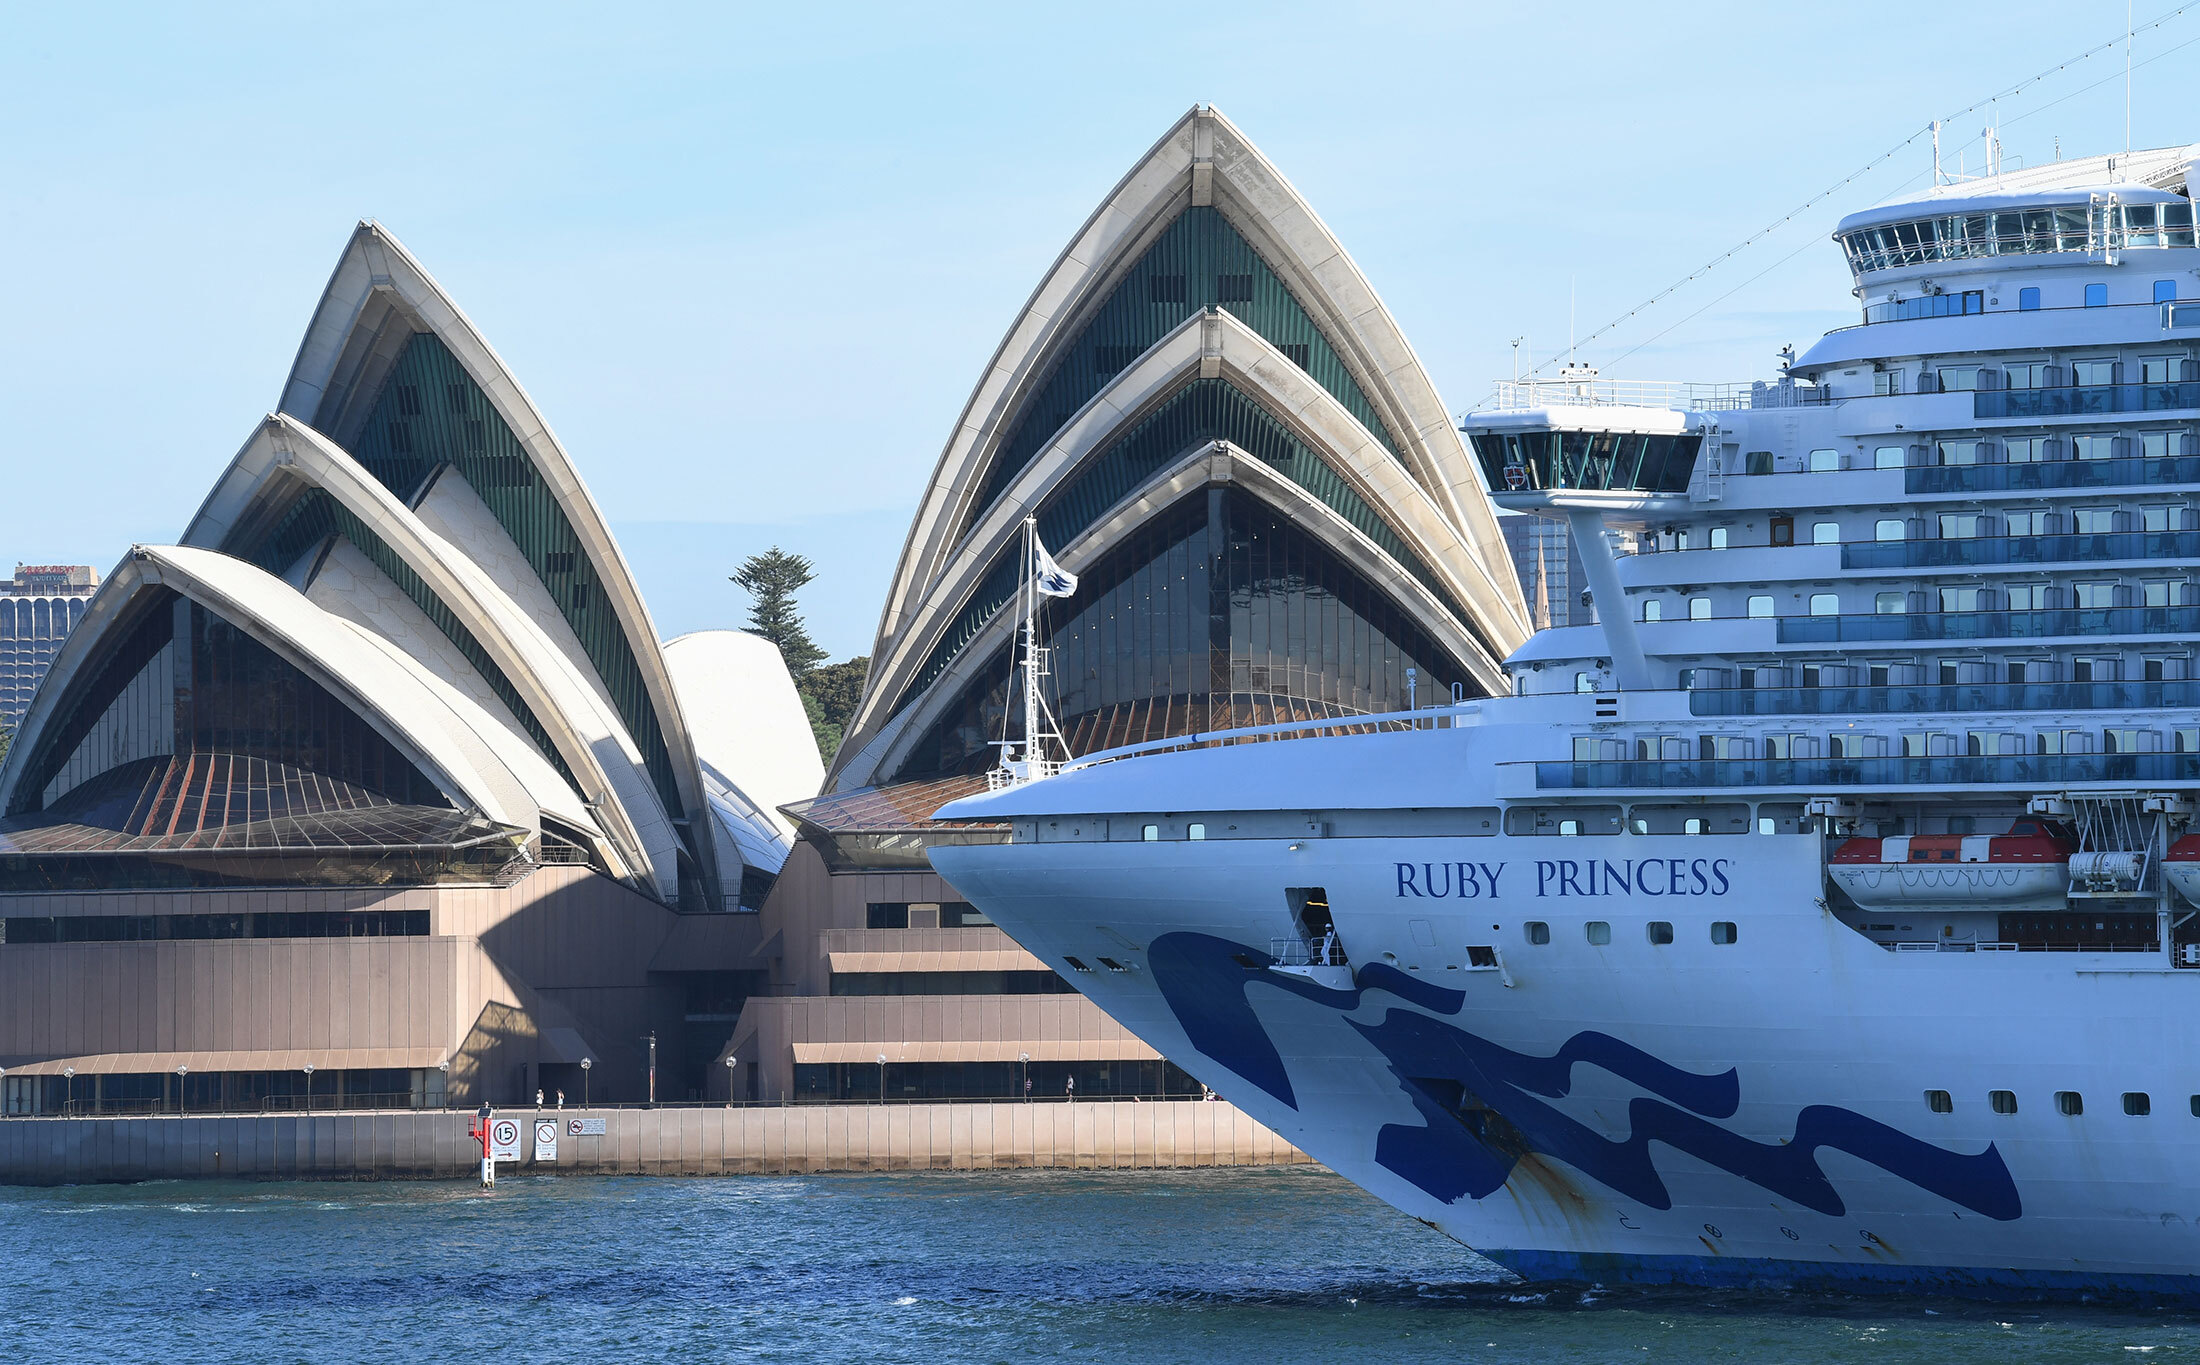 Carnival S Ruby Princess Cruise Ship Spread Coronavirus Around The World Bloomberg